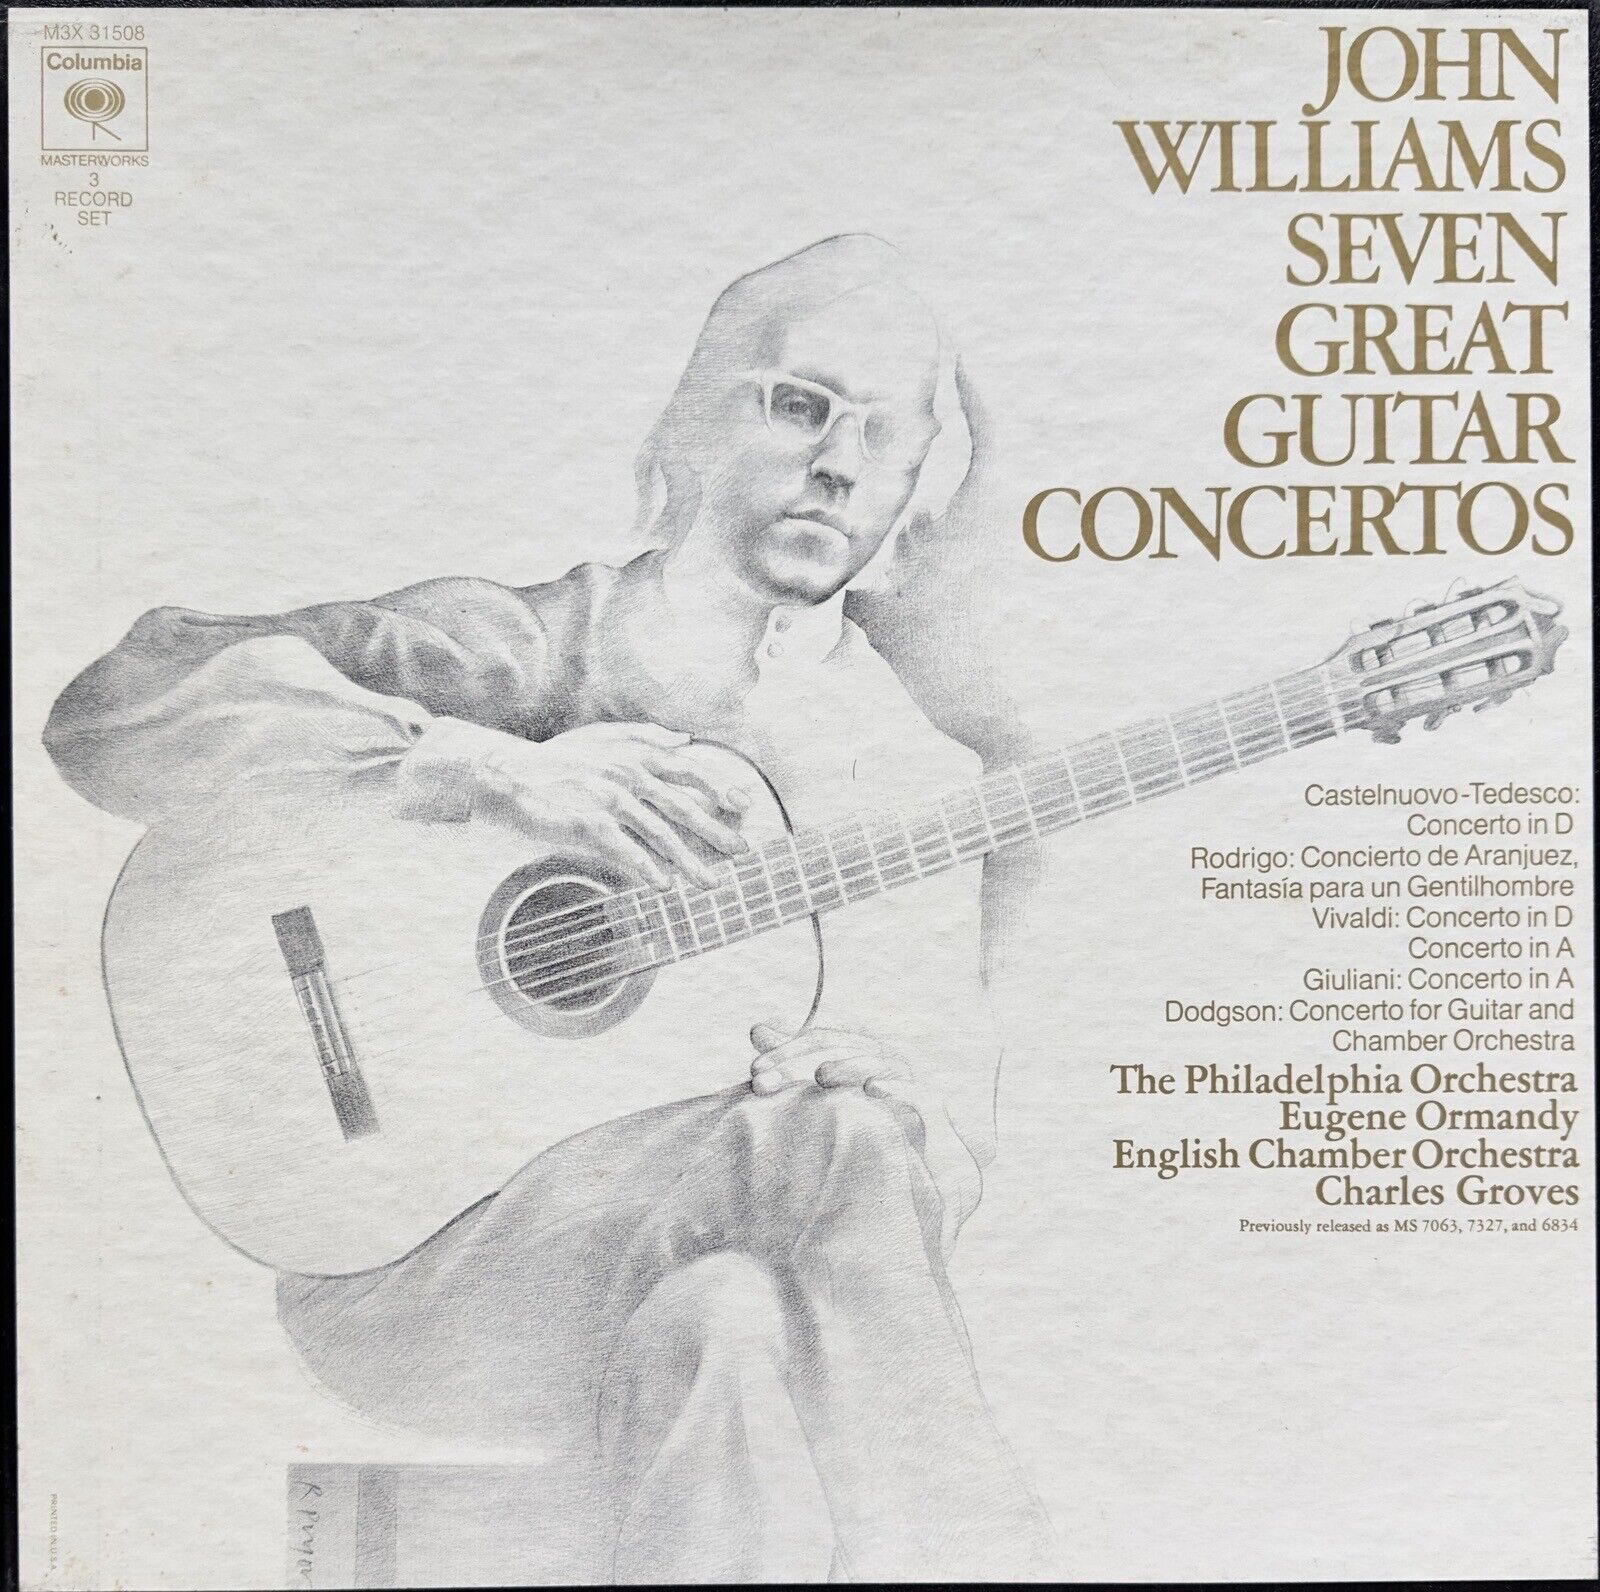 John Williams - Seven Great Guitar Concertos PROMO COPY Vinyl 3LP 1973 M3X 31508